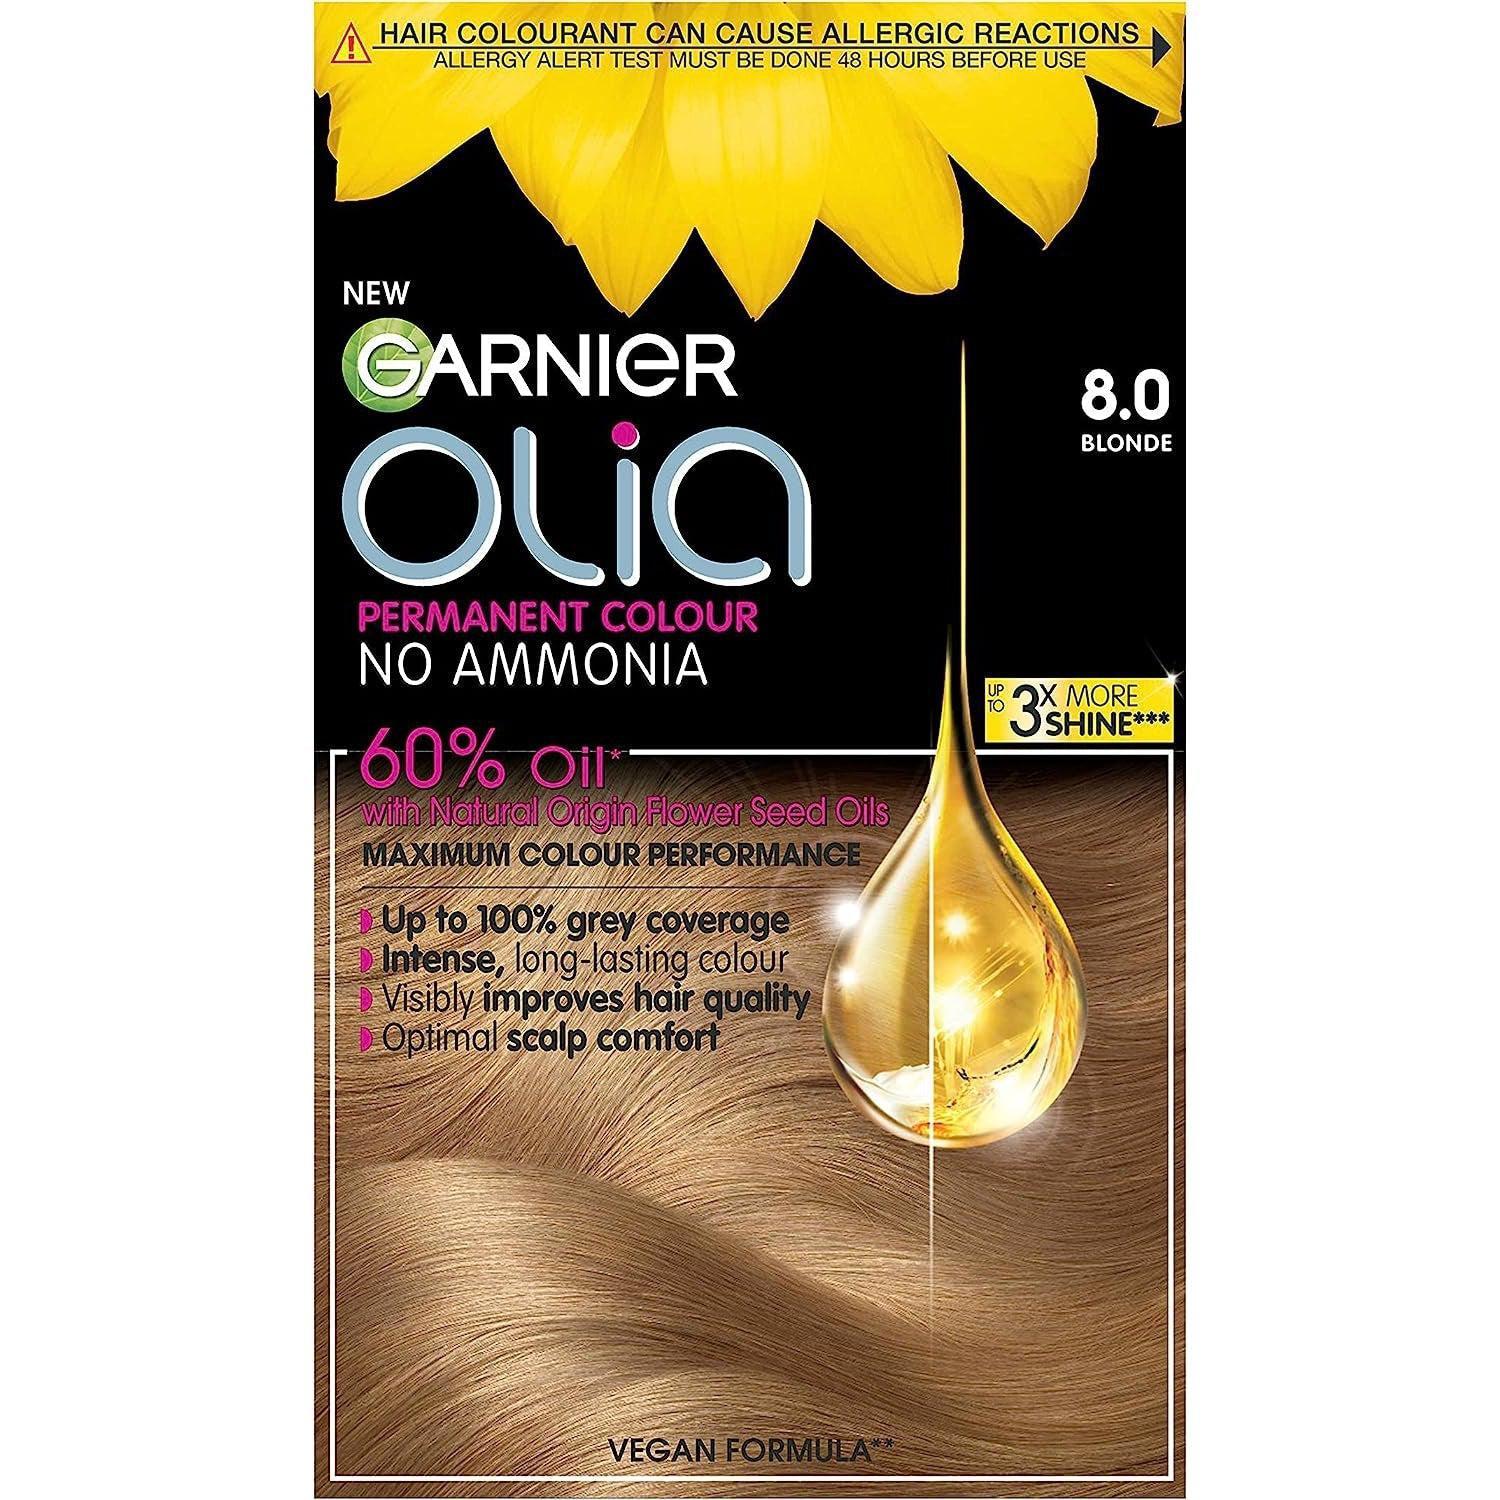 Garnier Olia 8.0 Blonde Permanent Hair Dye - Healthxpress.ie